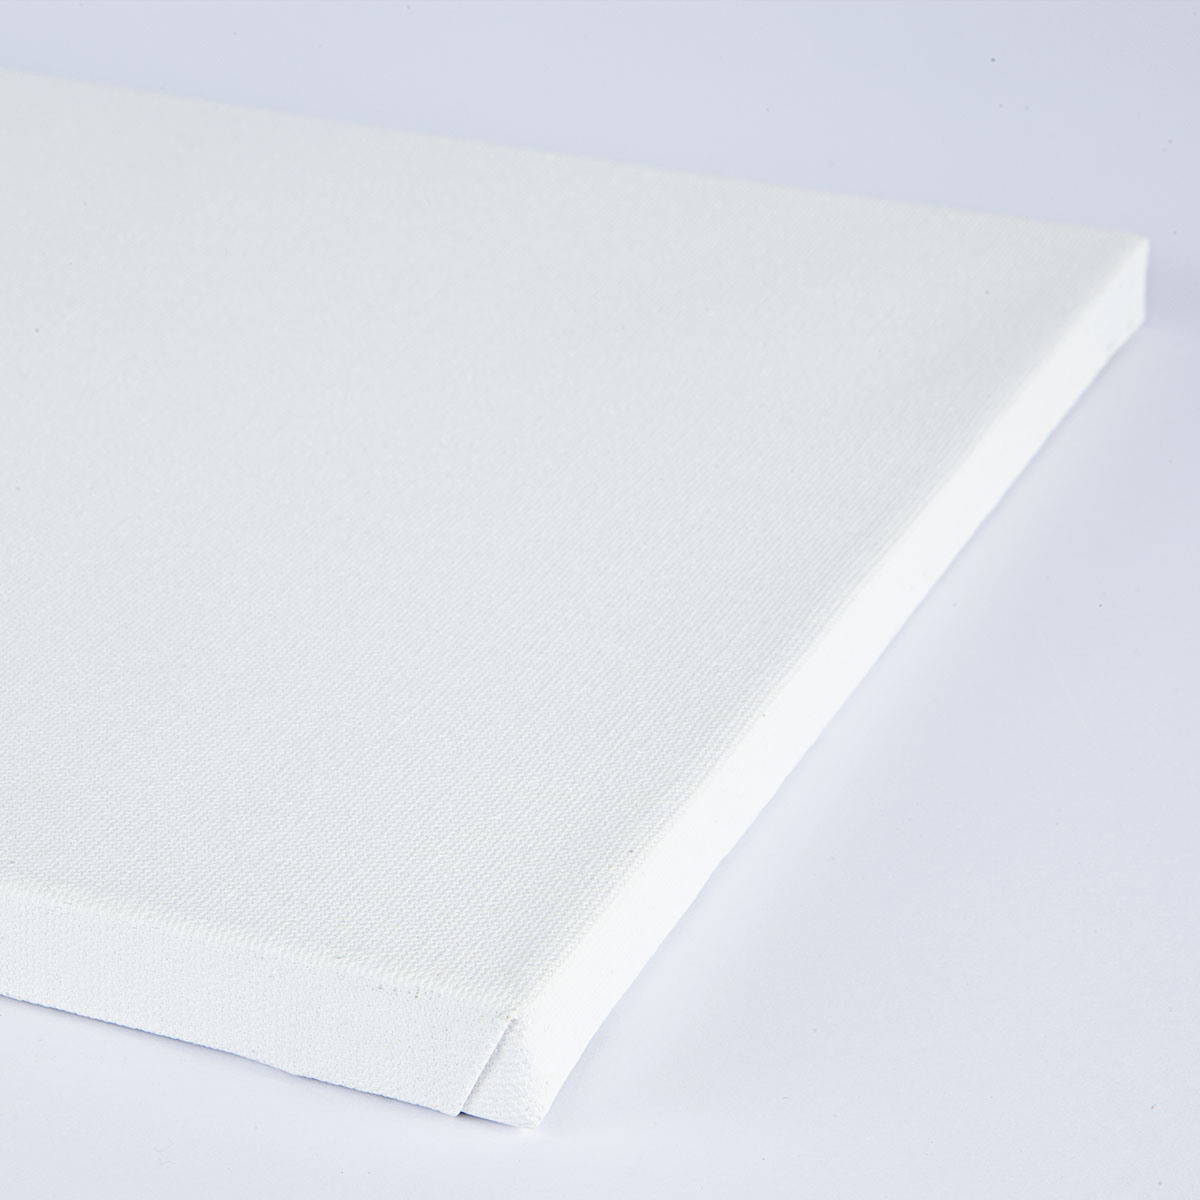 Basic Stretched Canvas 260 g Cotton F5 35 x 27 cm 